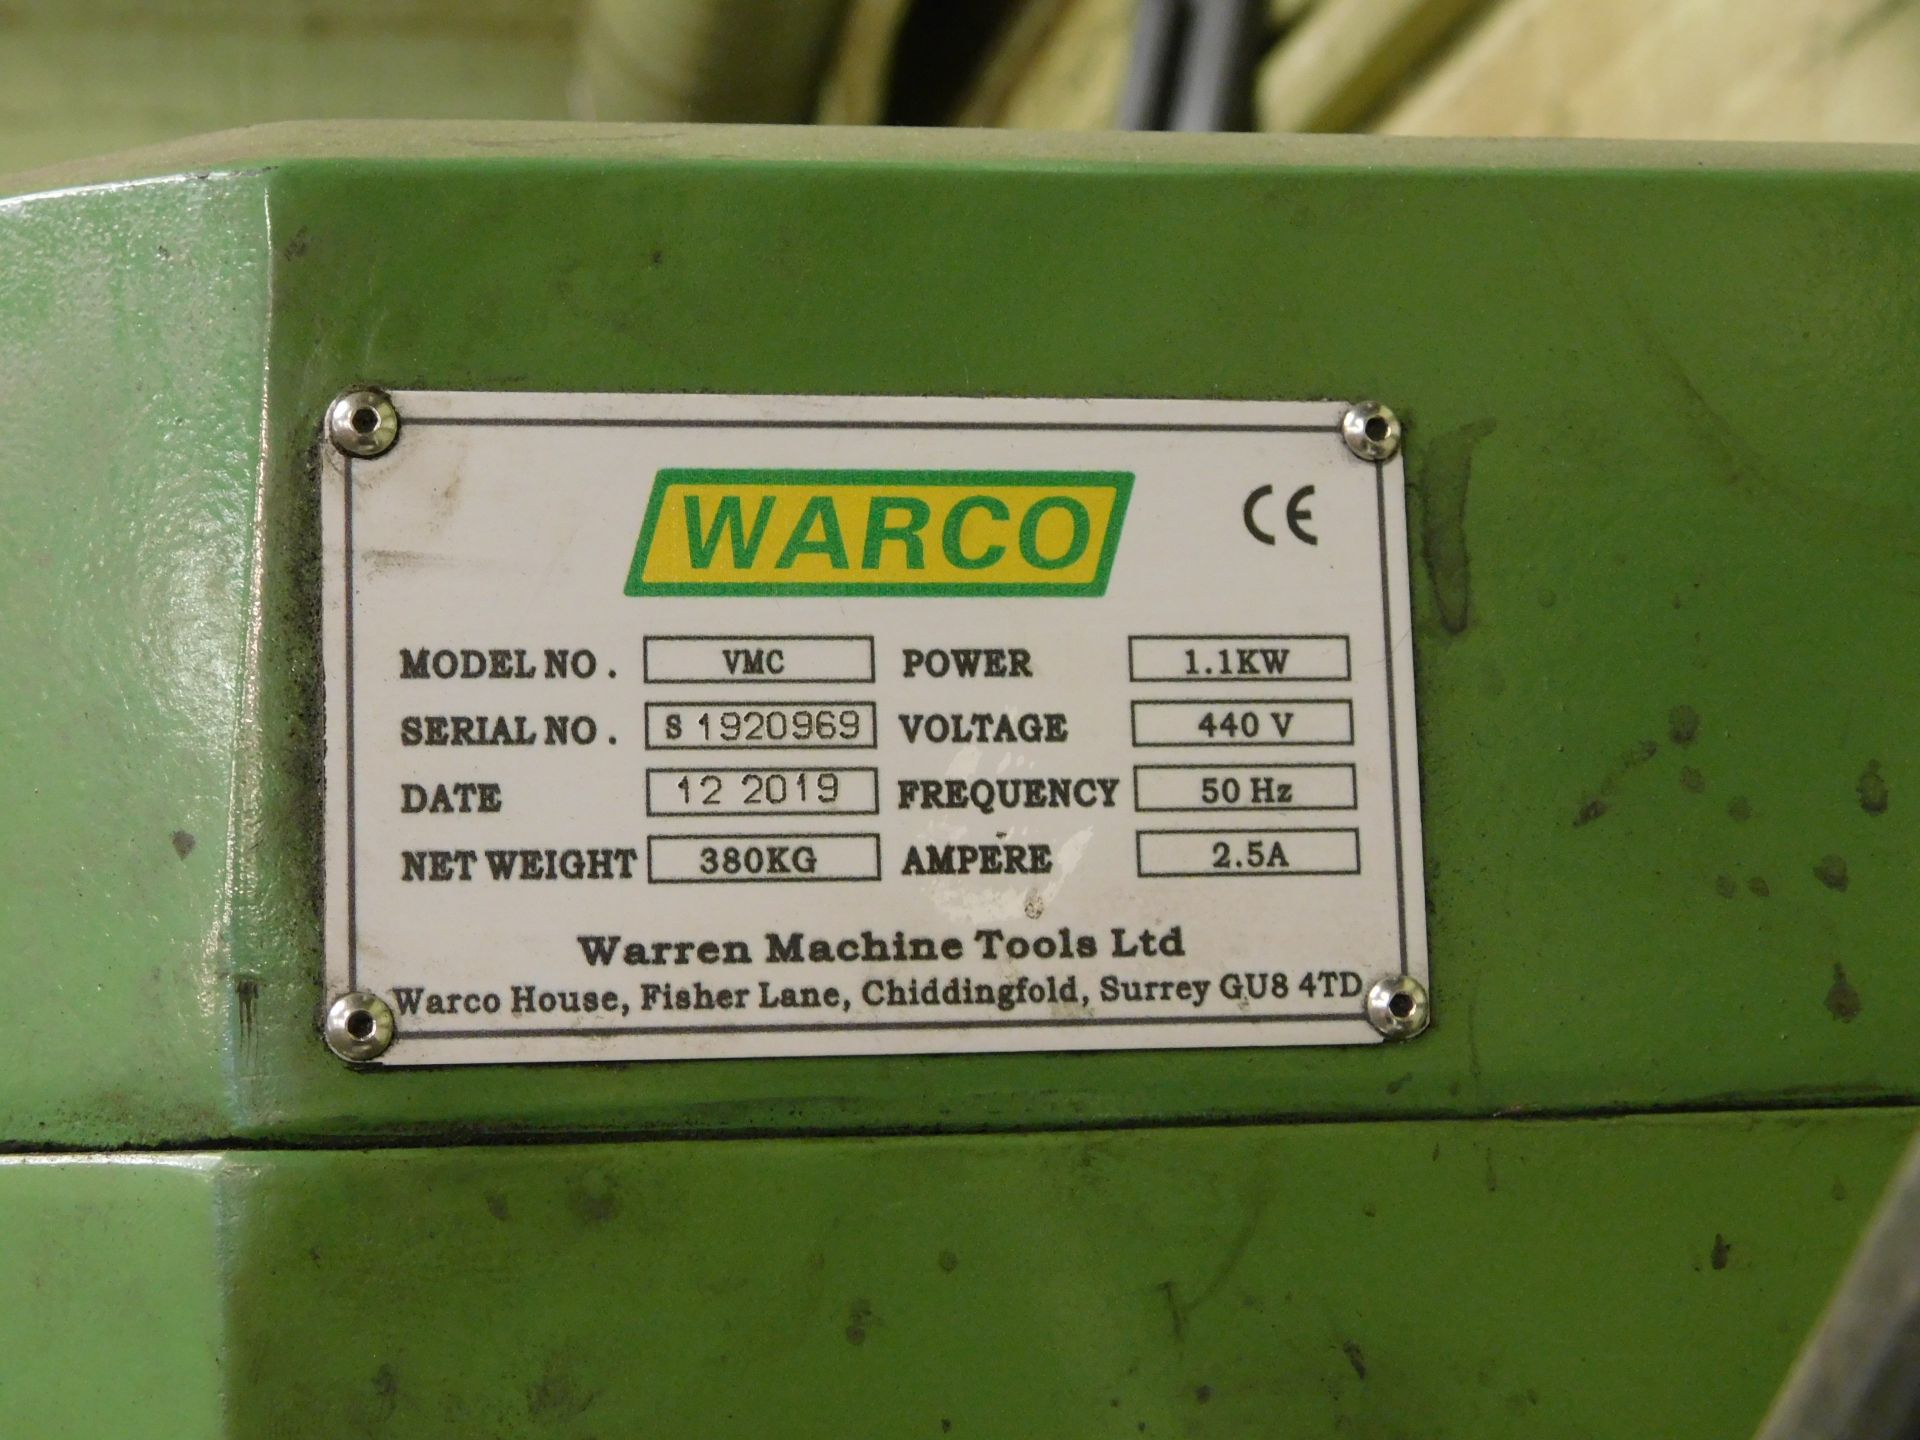 Warco VMG Turret Milling Machine (2019), Serial Number 1920969, with DROD60/3V DRO & Adjacent - Image 9 of 9